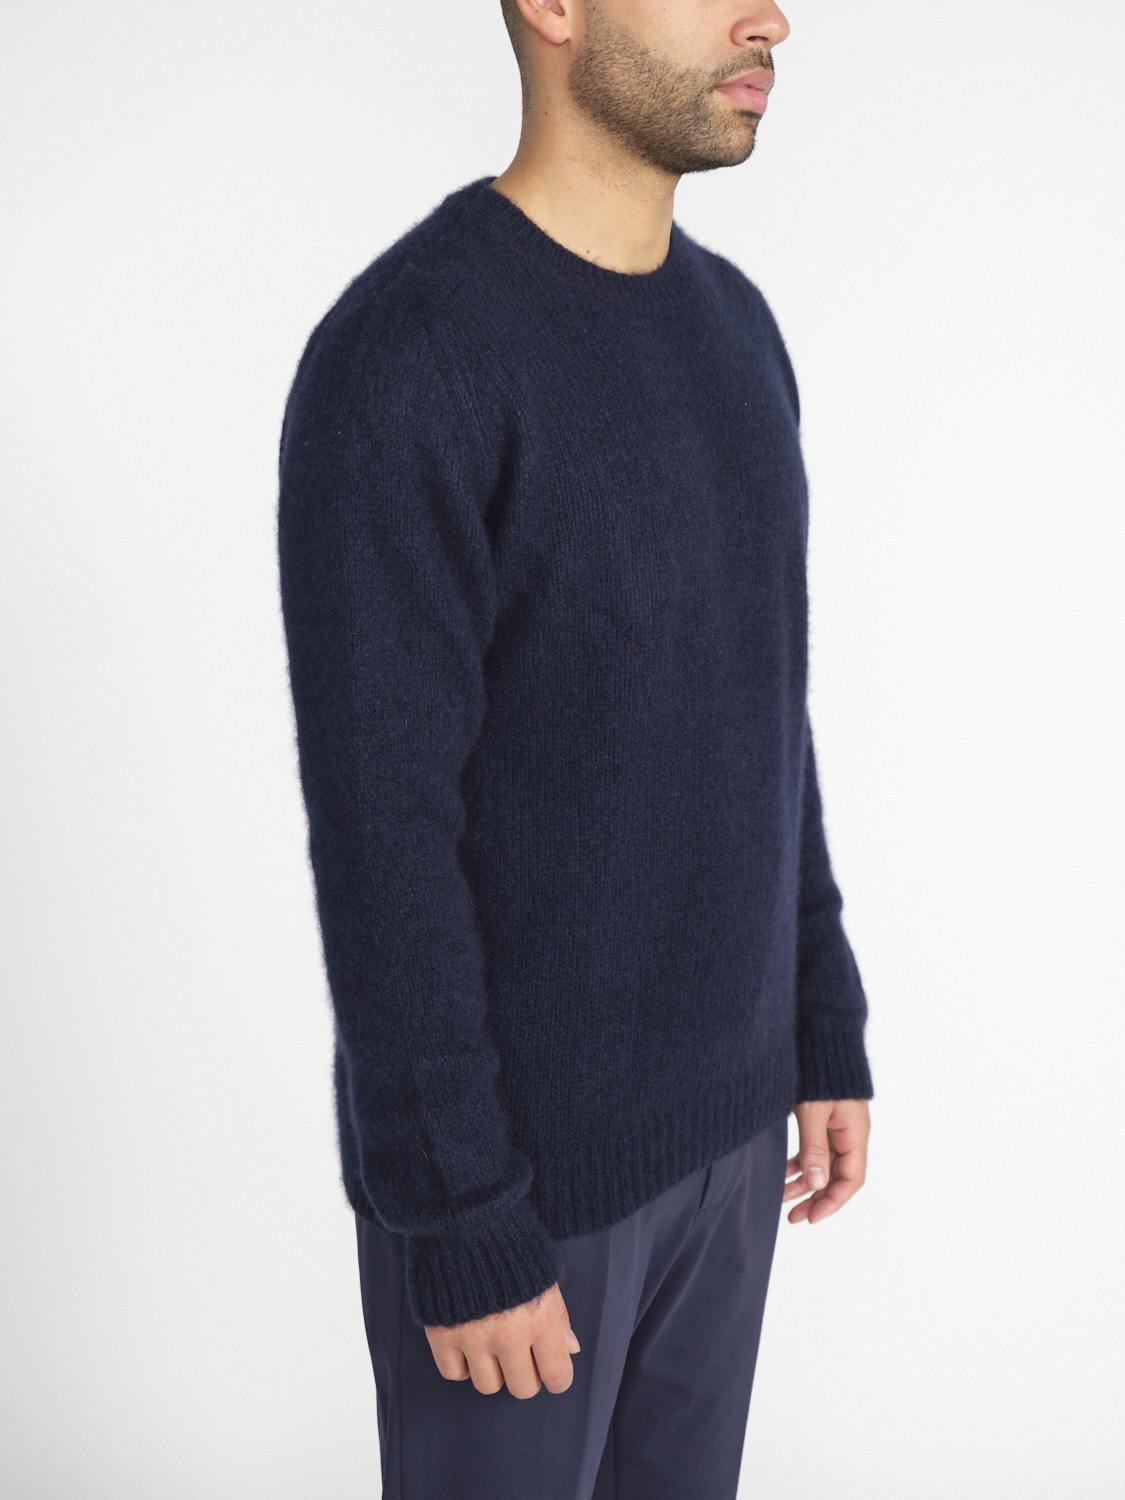 Stephan Boya Boya Leo – Soft cashmere sweater  marine S